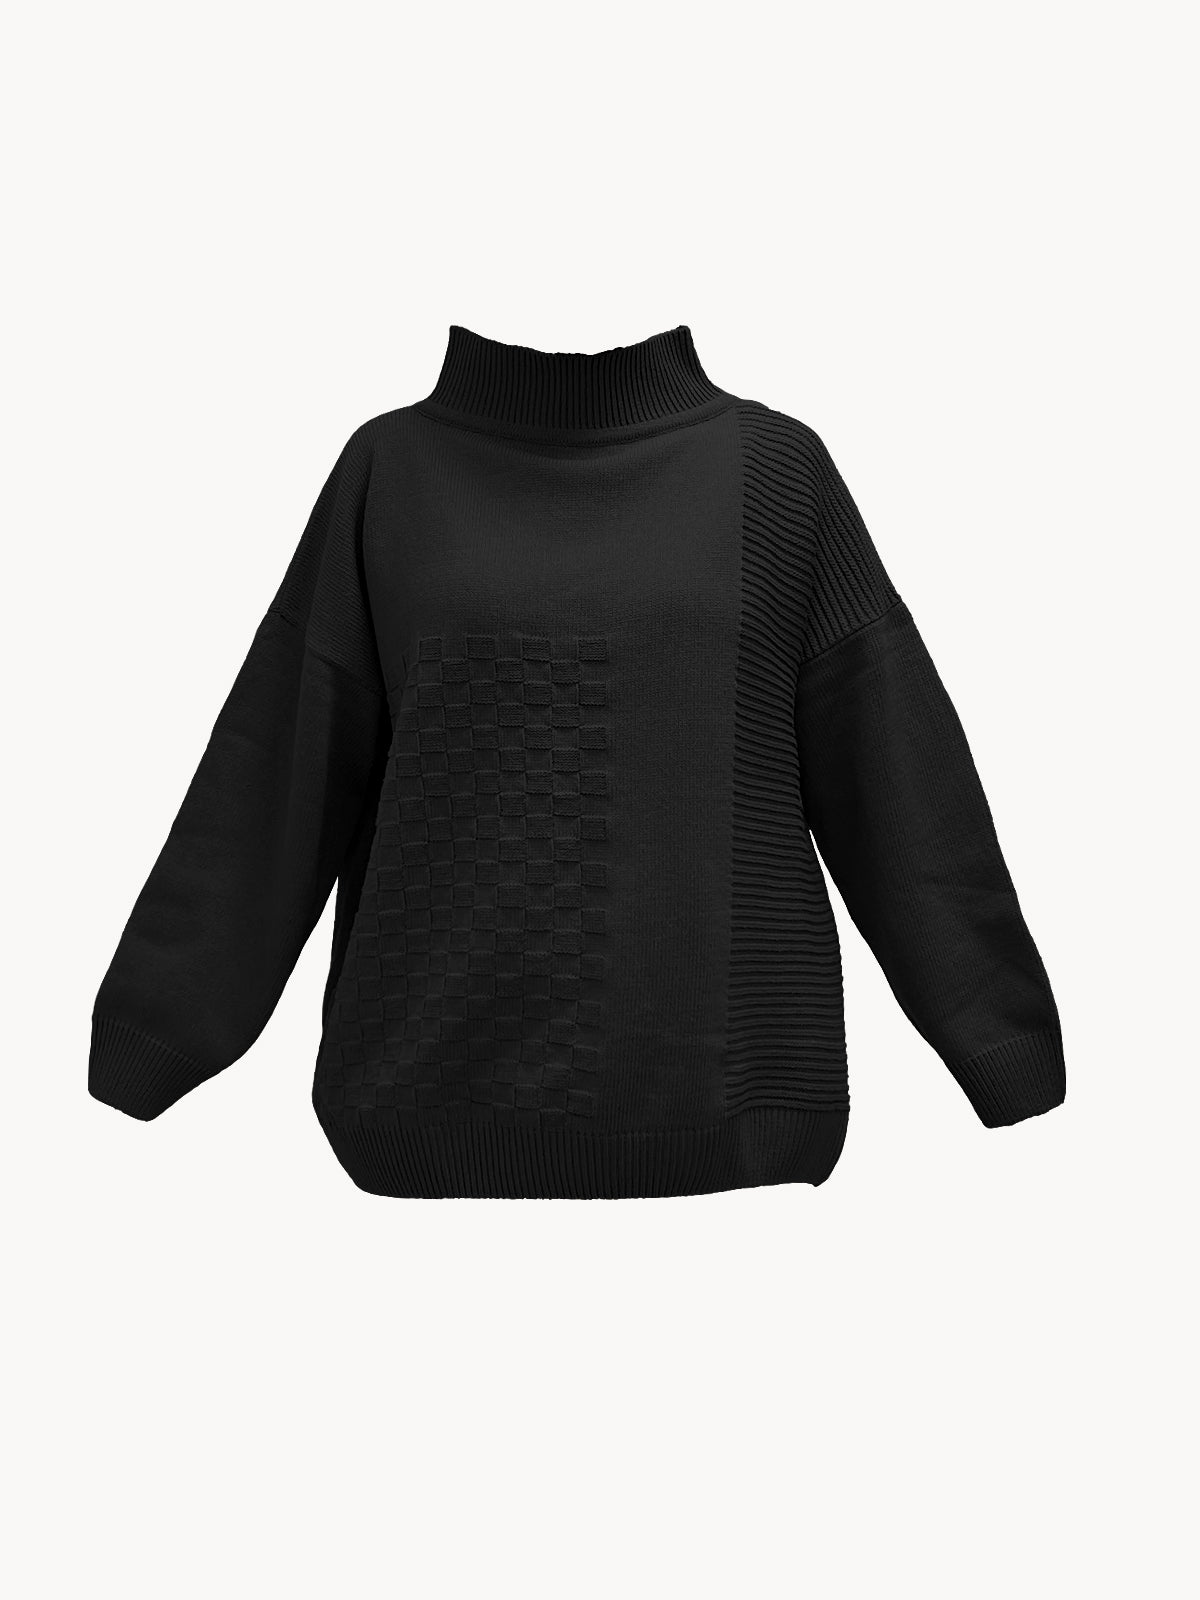 Black knitted oversized unisex sweater